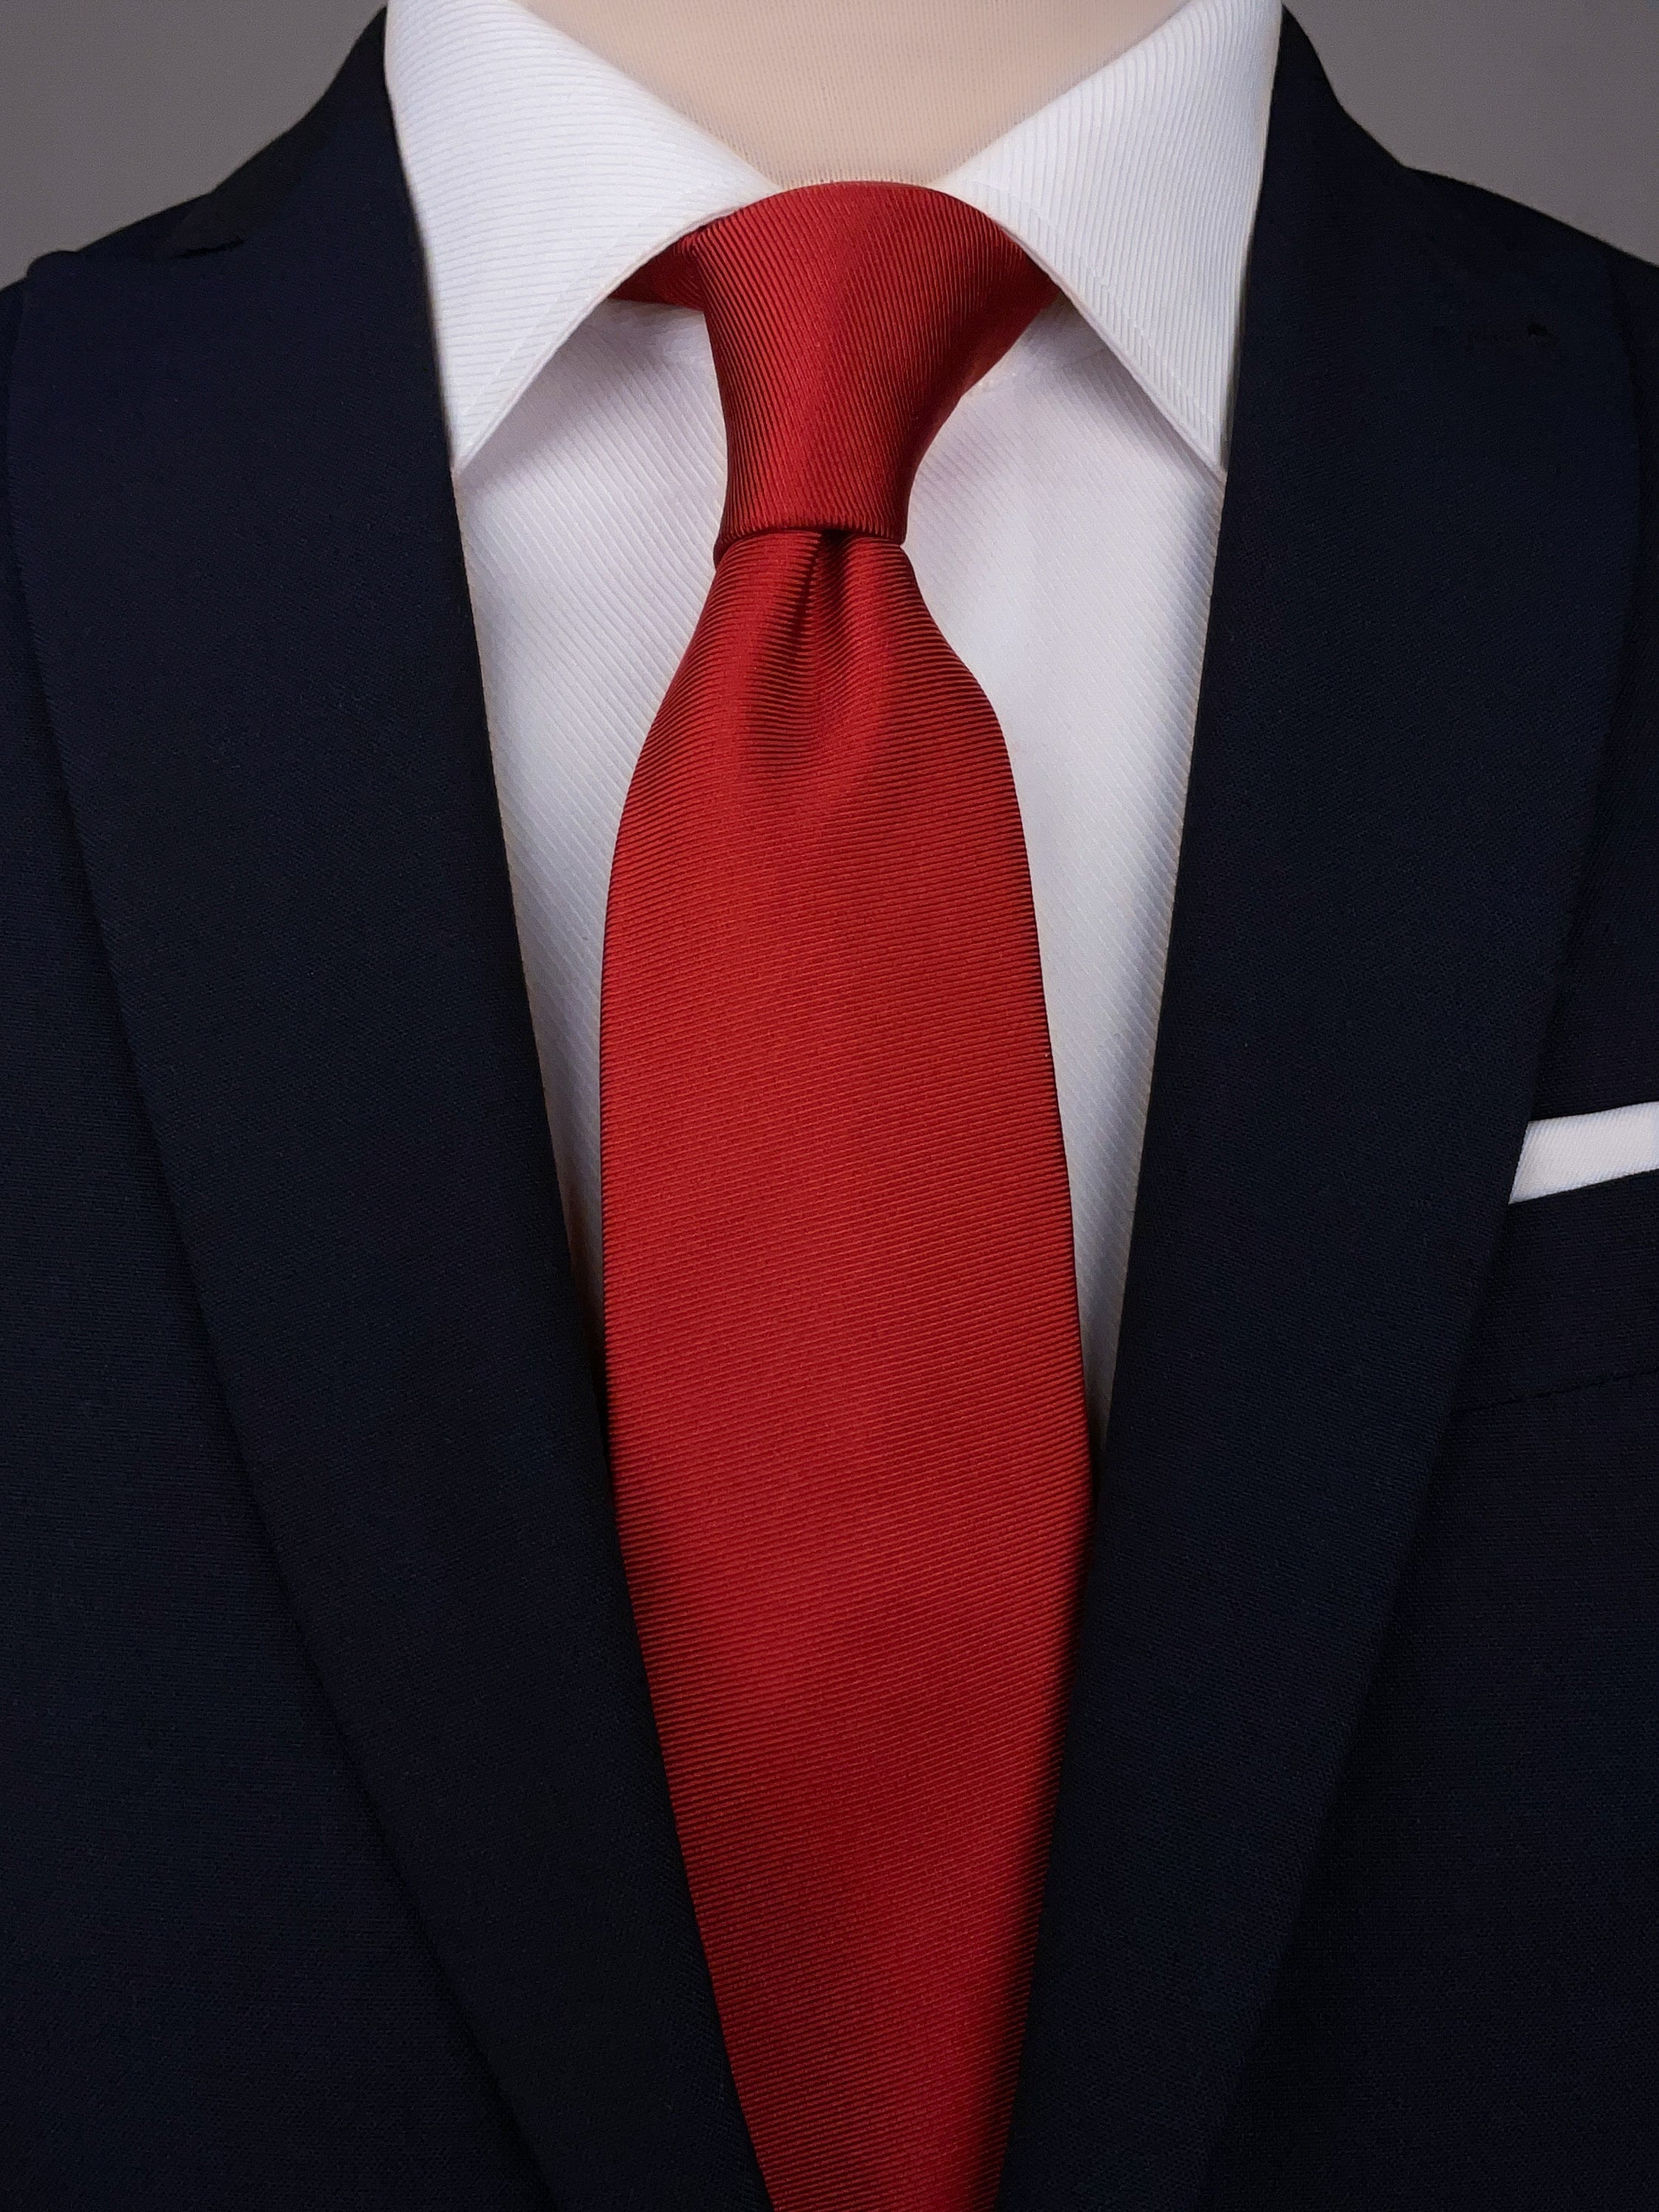 Valentine Red silk necktie worn with a white shirt and a navy blue suit